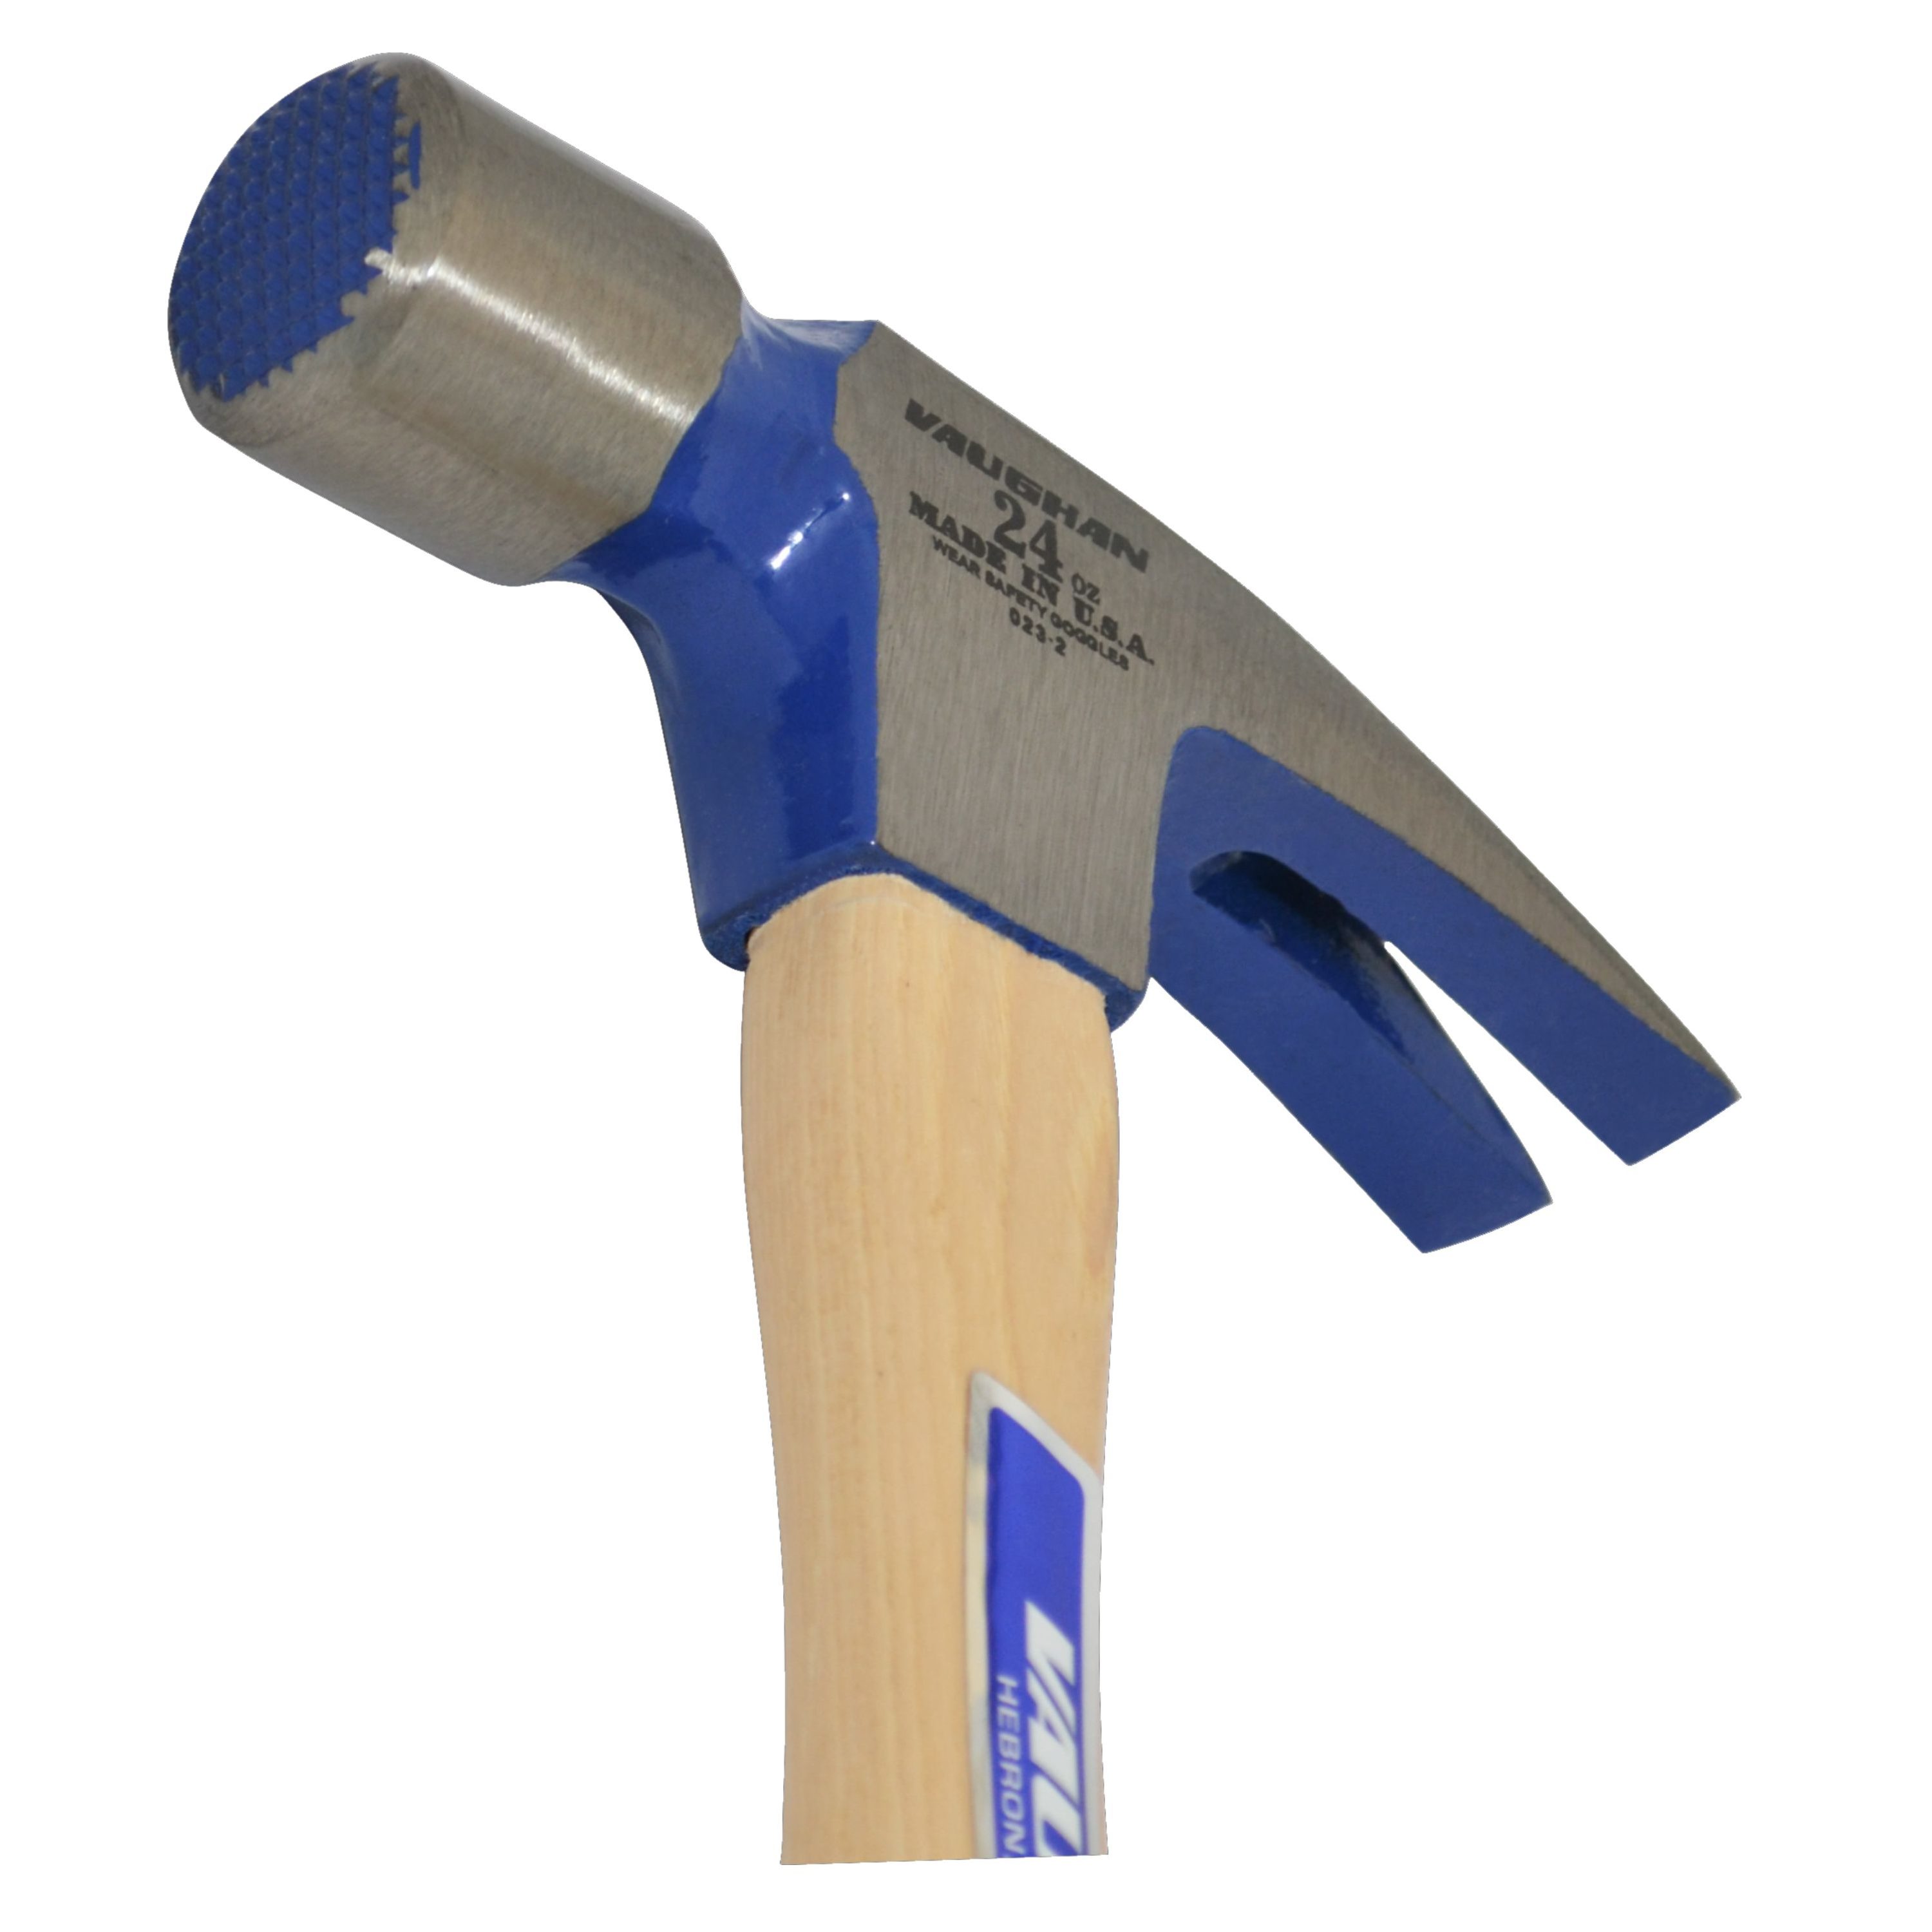 VAUGHAN 24-oz Milled Face Steel Head Wood Framing Hammer in the 